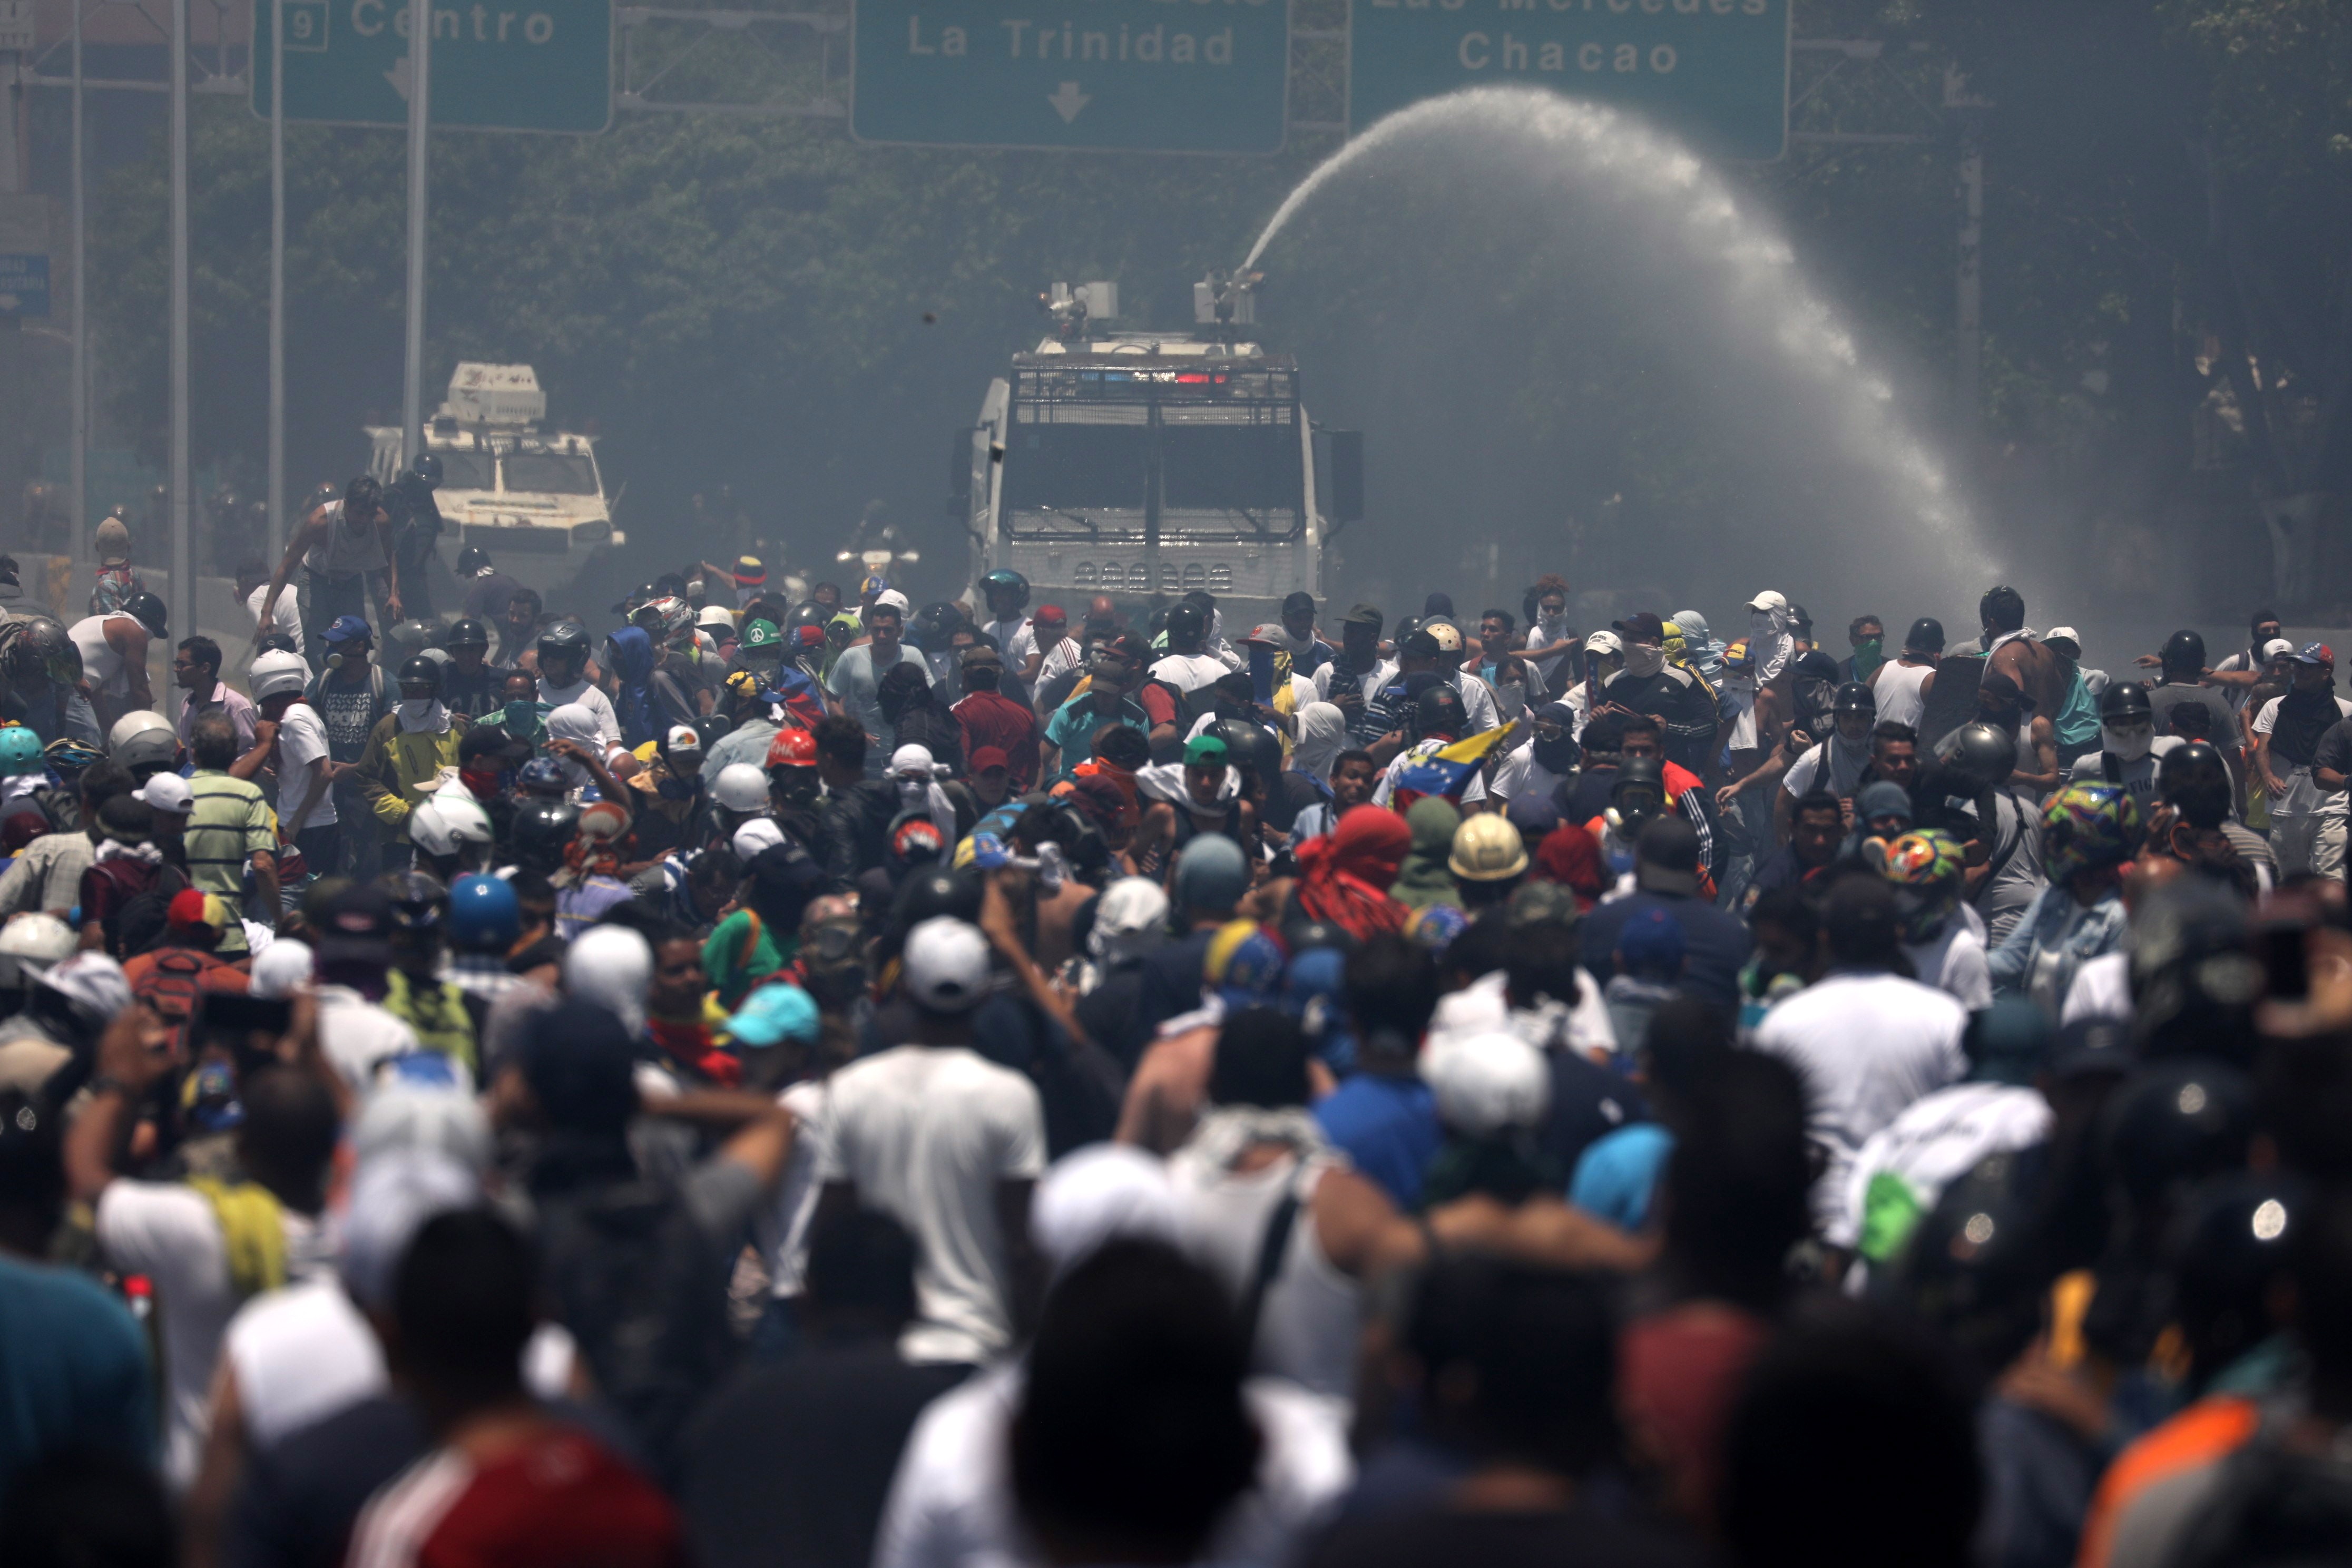 Teens death sparks new turmoil in Venezuela - CNN